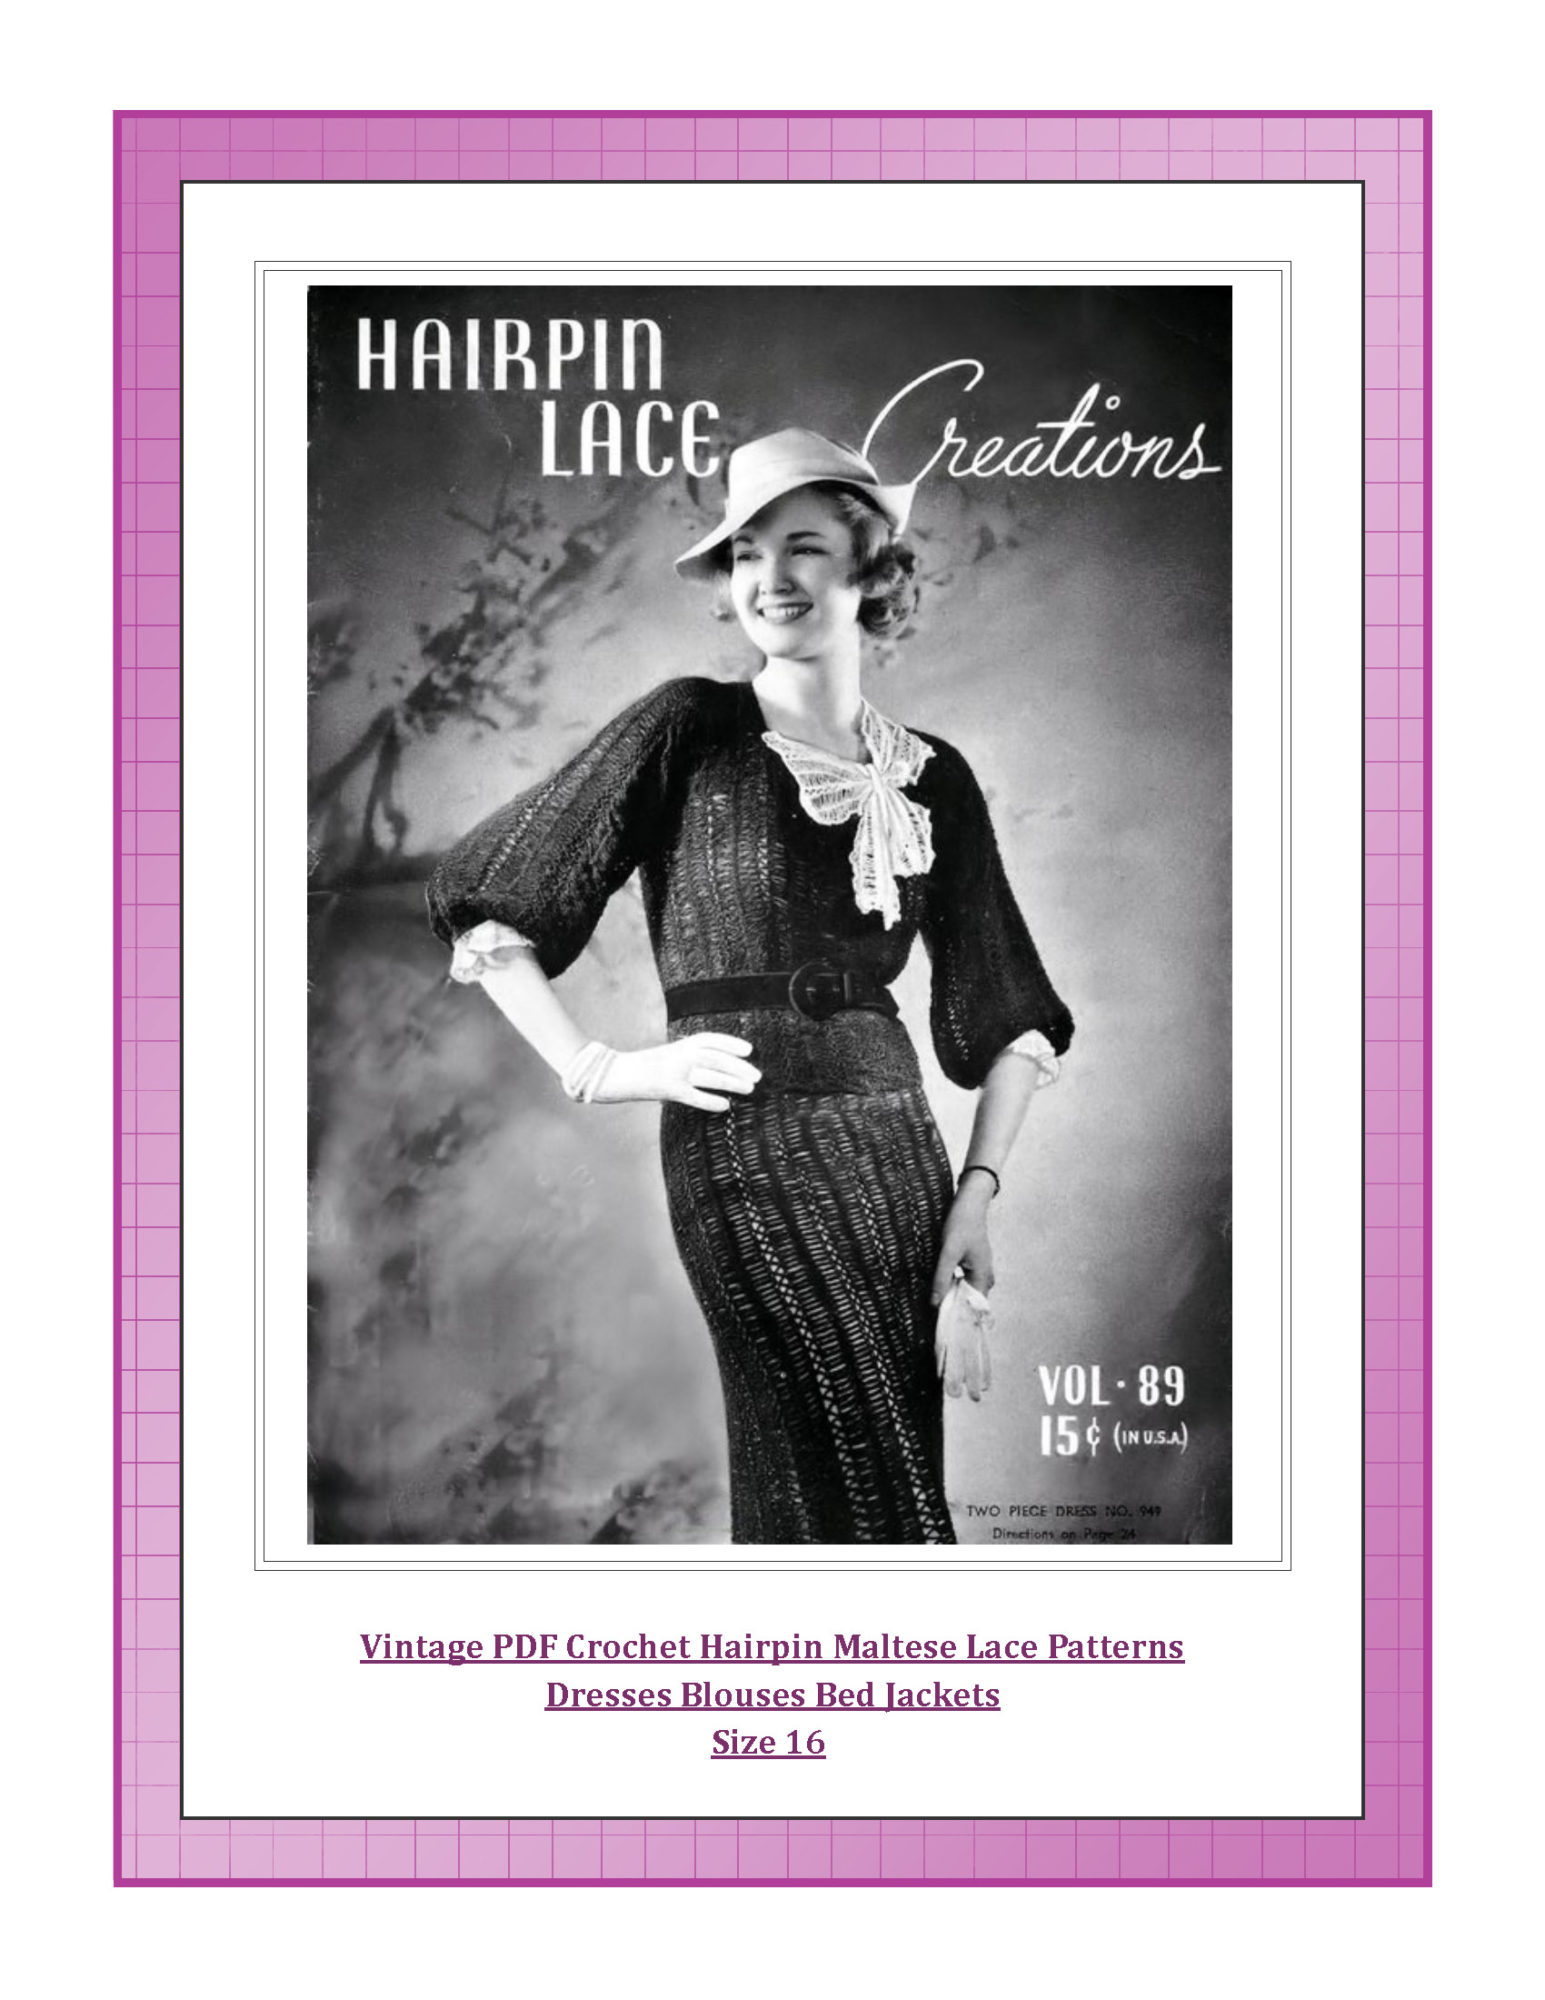 Vintage PDF Crochet Hairpin Maltese Lace Patterns Dresses Blouses Bed Jackets Size 16 